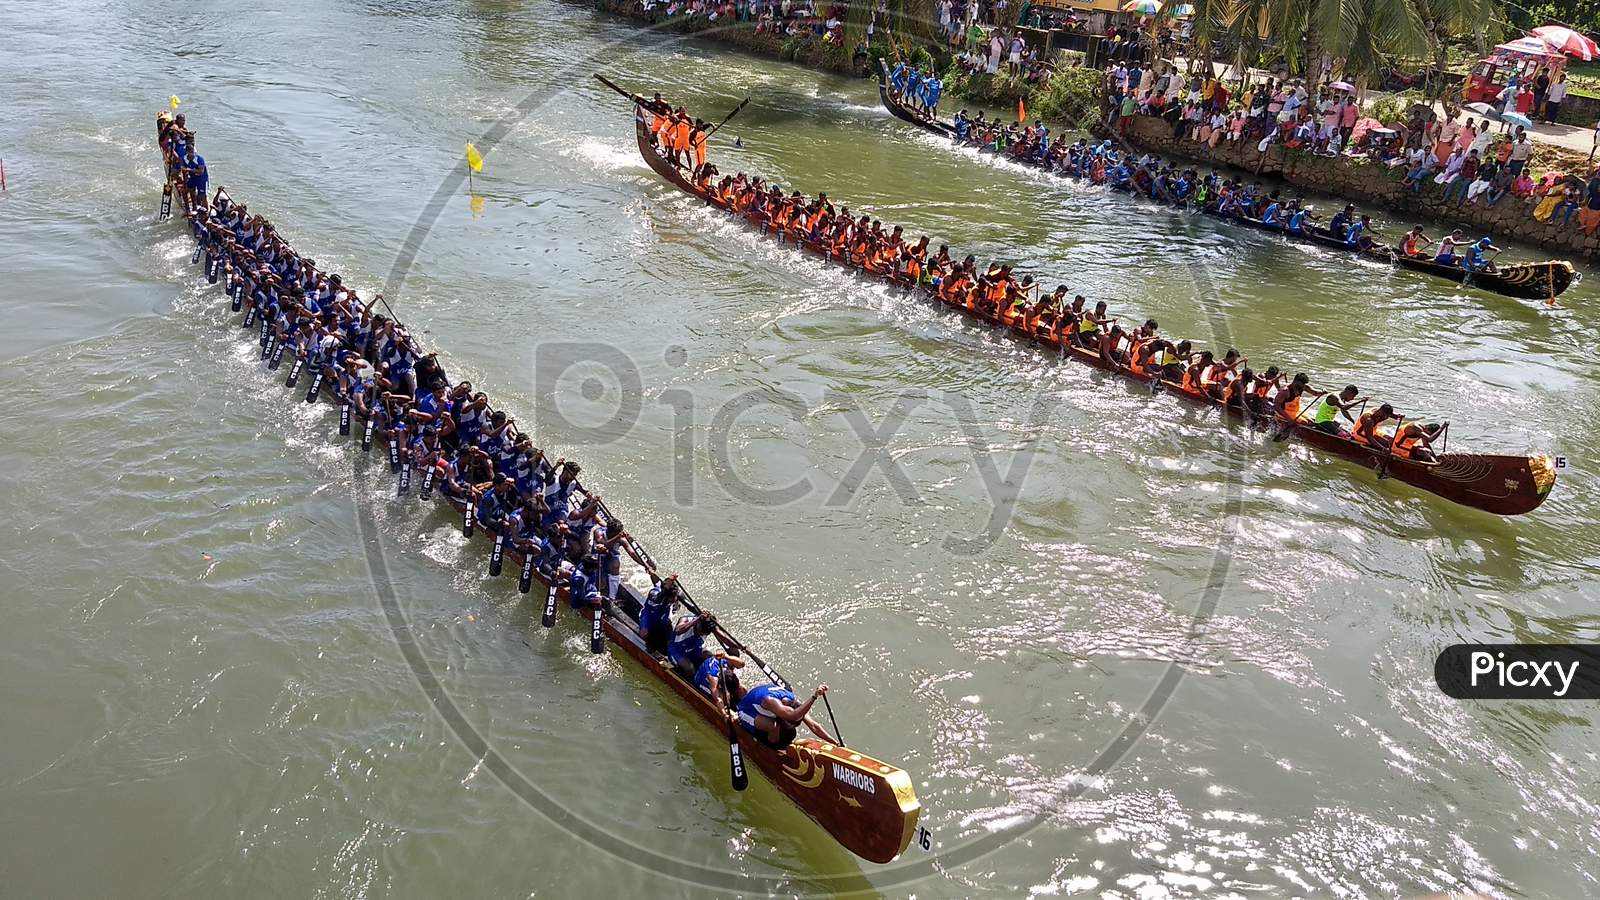 Three boats(type- veppu vallam) are heading towards finishing line in Kottayam boat race, India